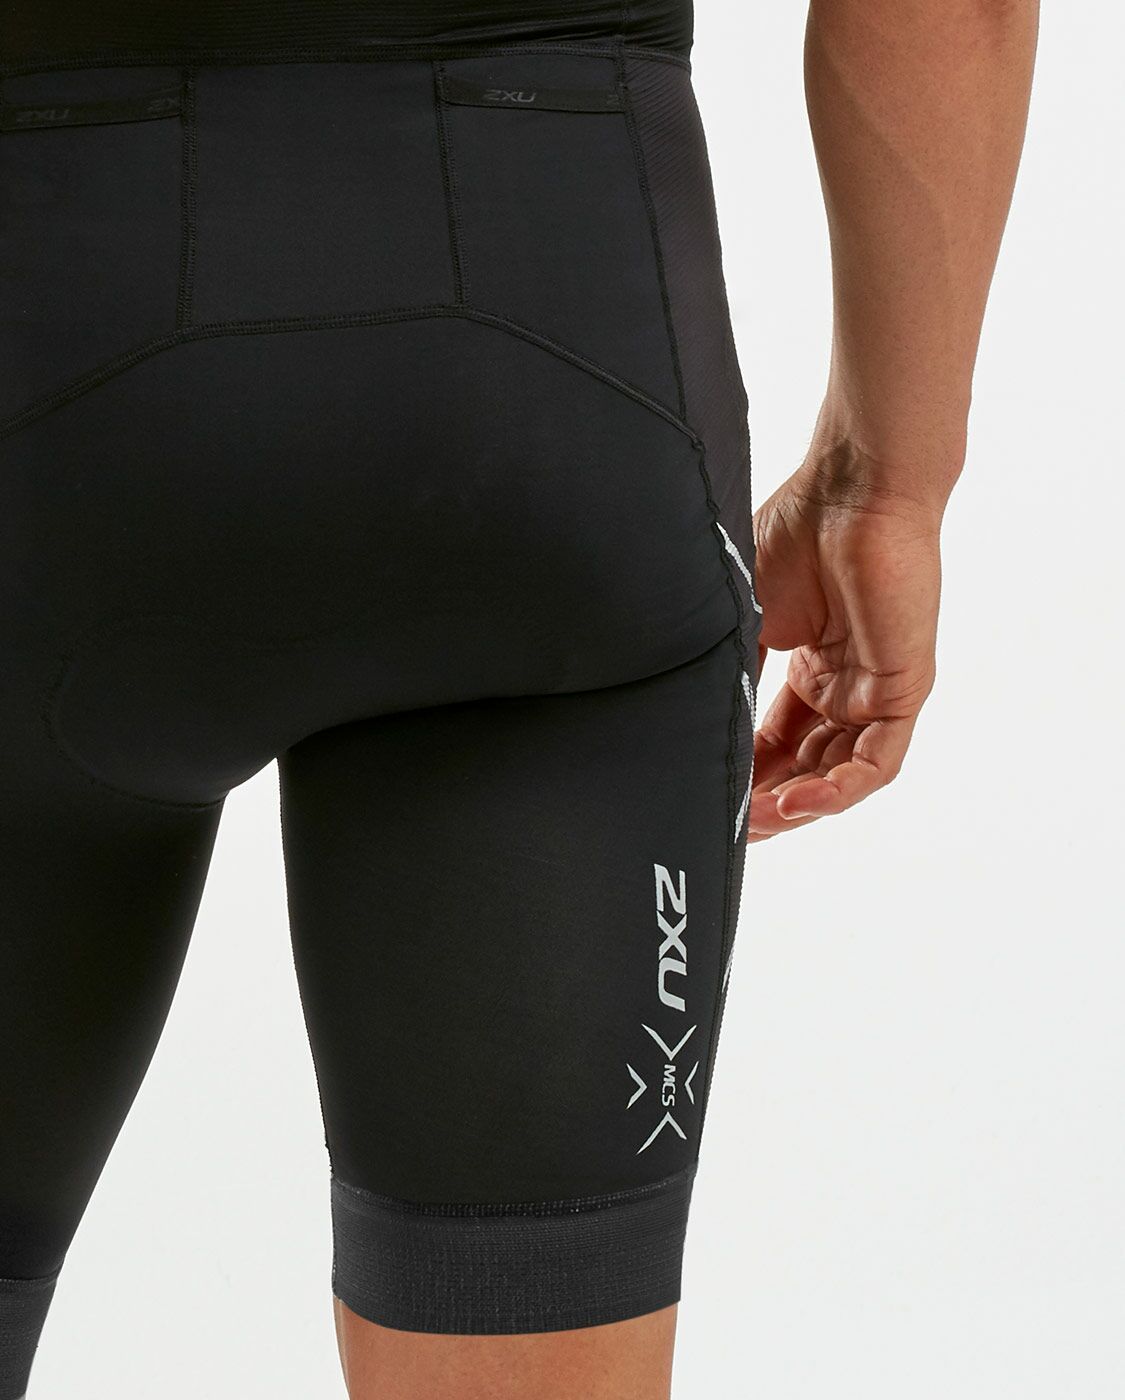 2XU South Africa - Men's Compression Full Zip Sleeved Trisuit - Black - Black/Black